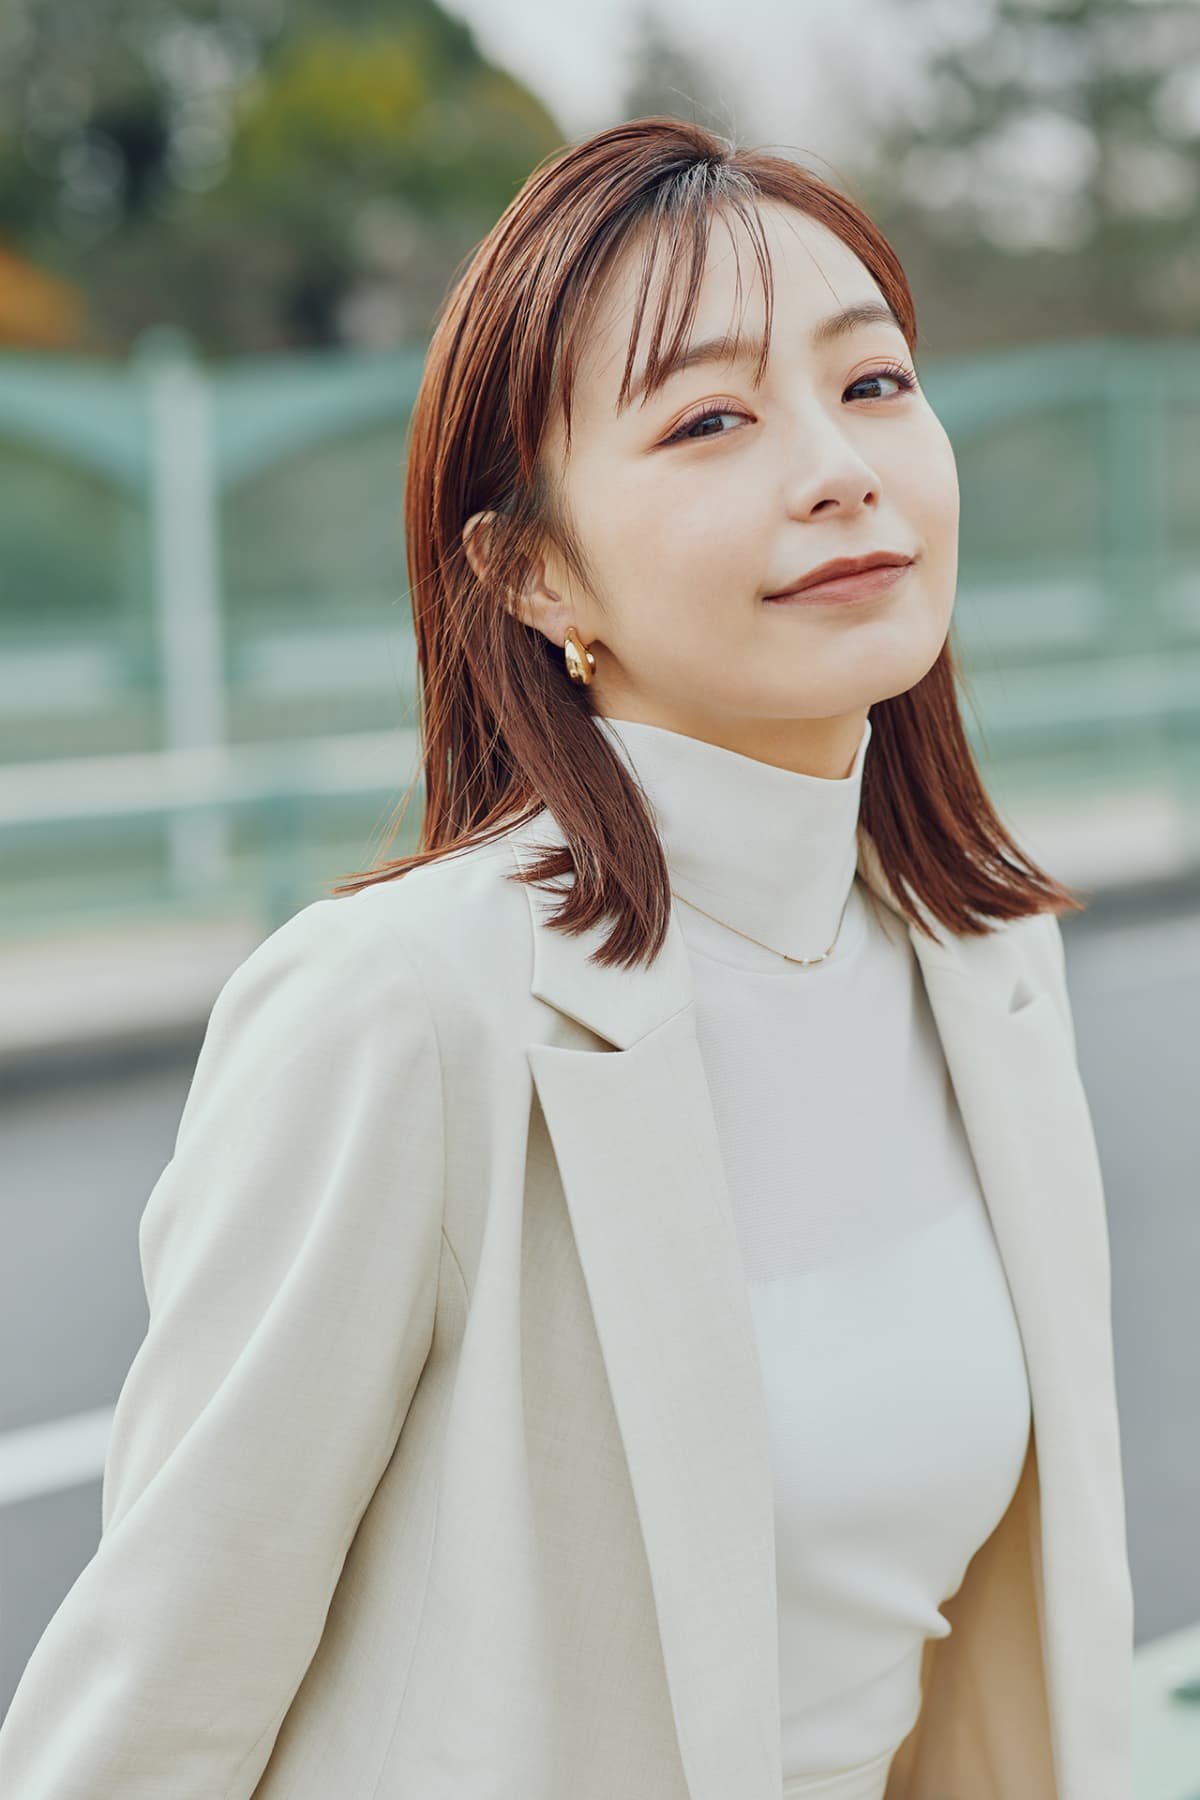 CELFORD/宇垣美裡/model actress